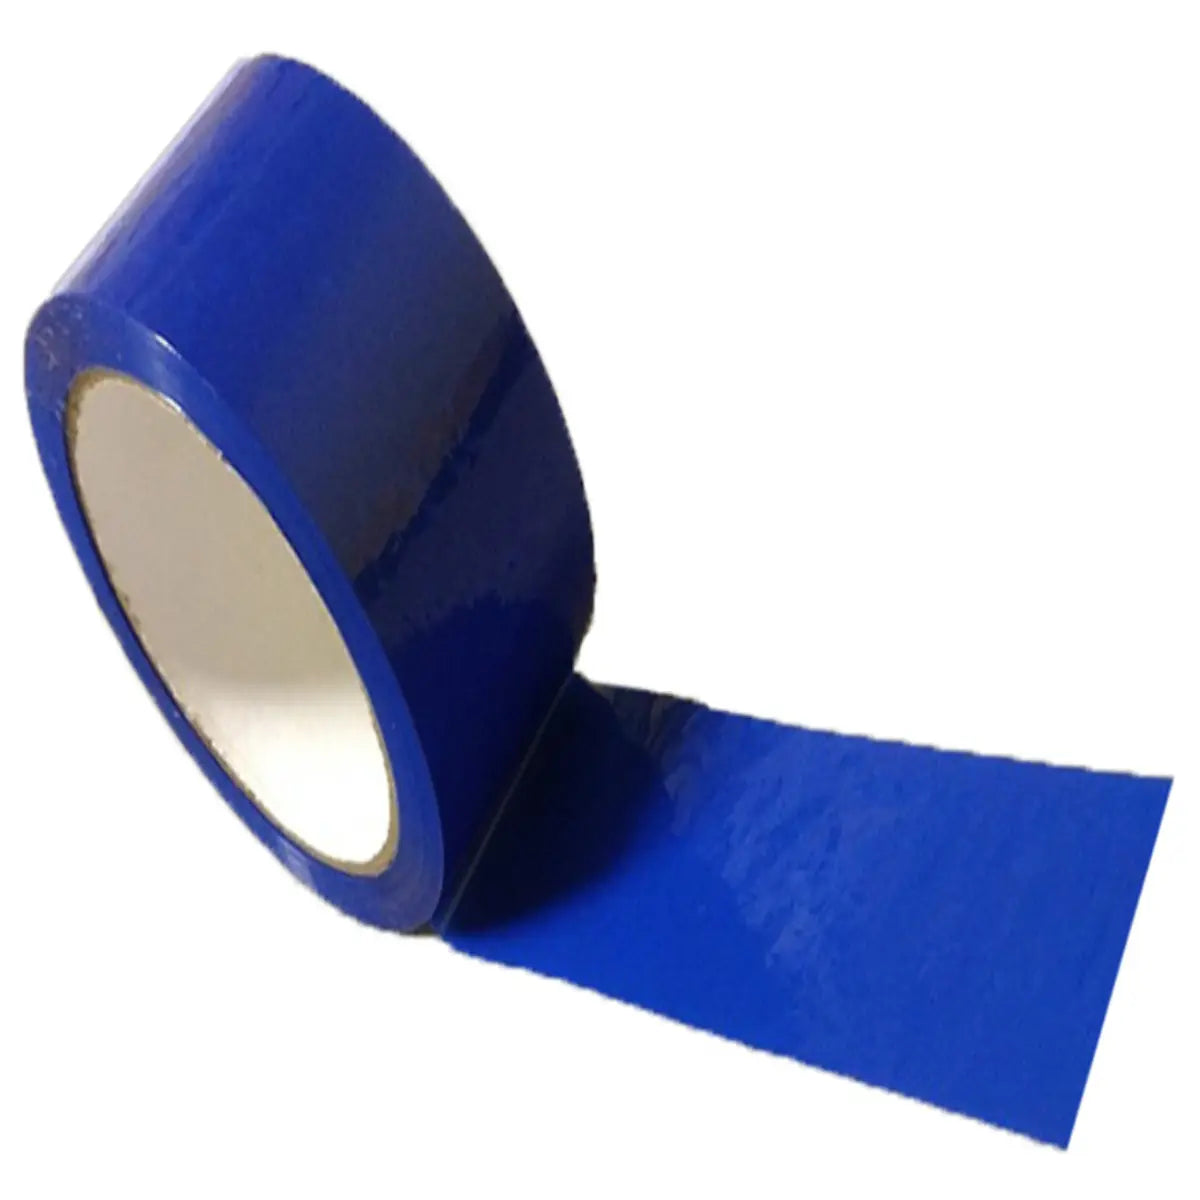 coloured adhesive tape - blue